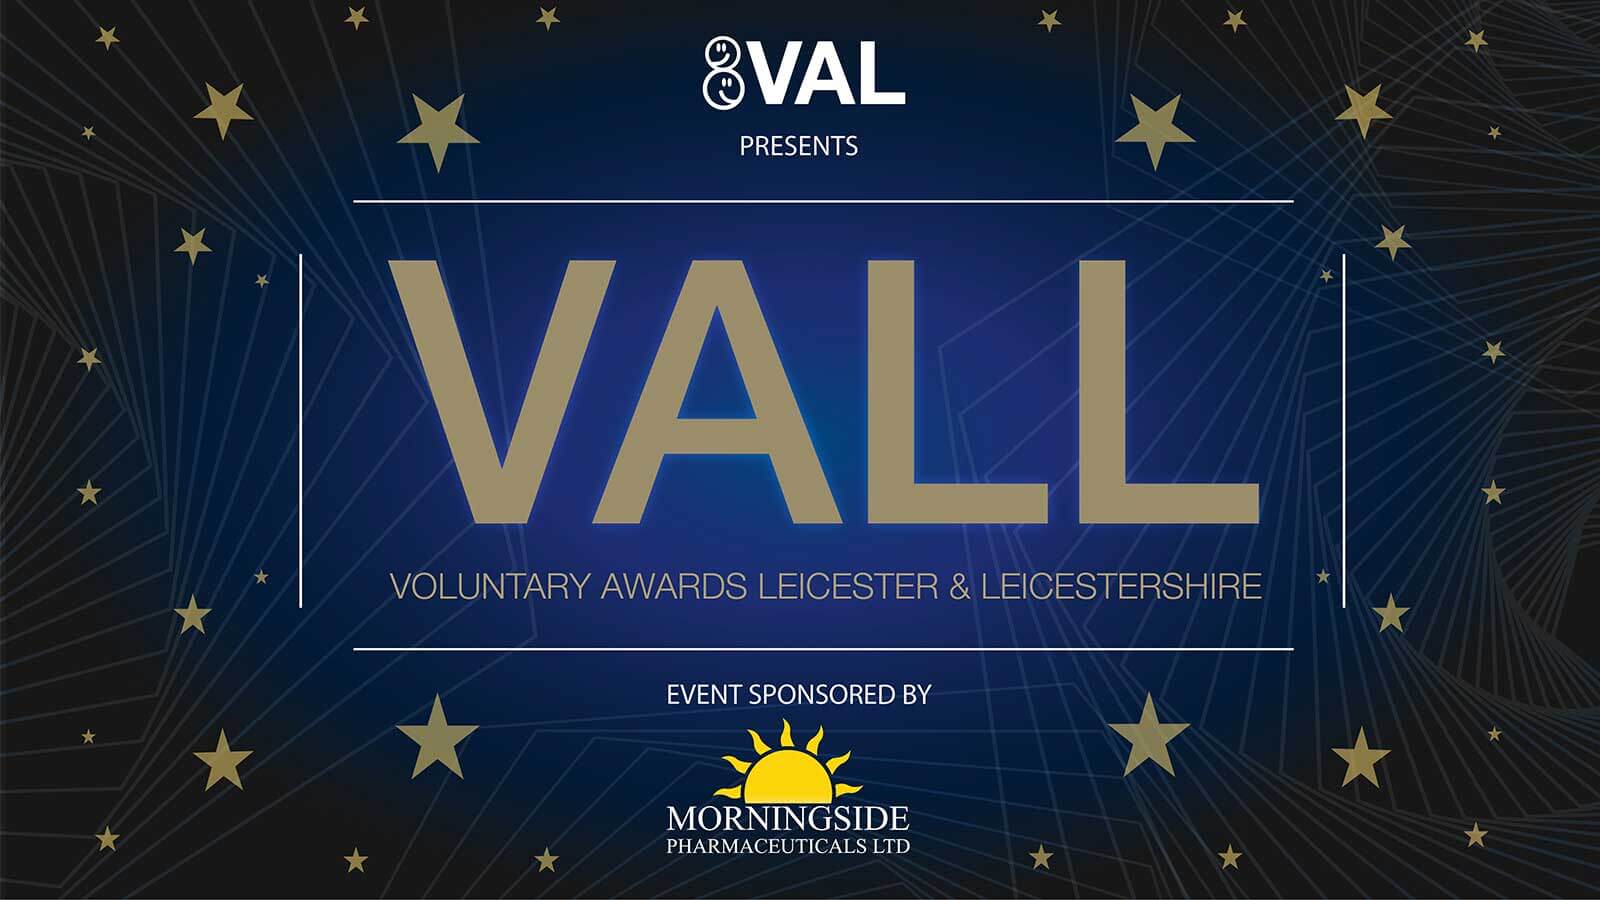 VALL Awards 2019